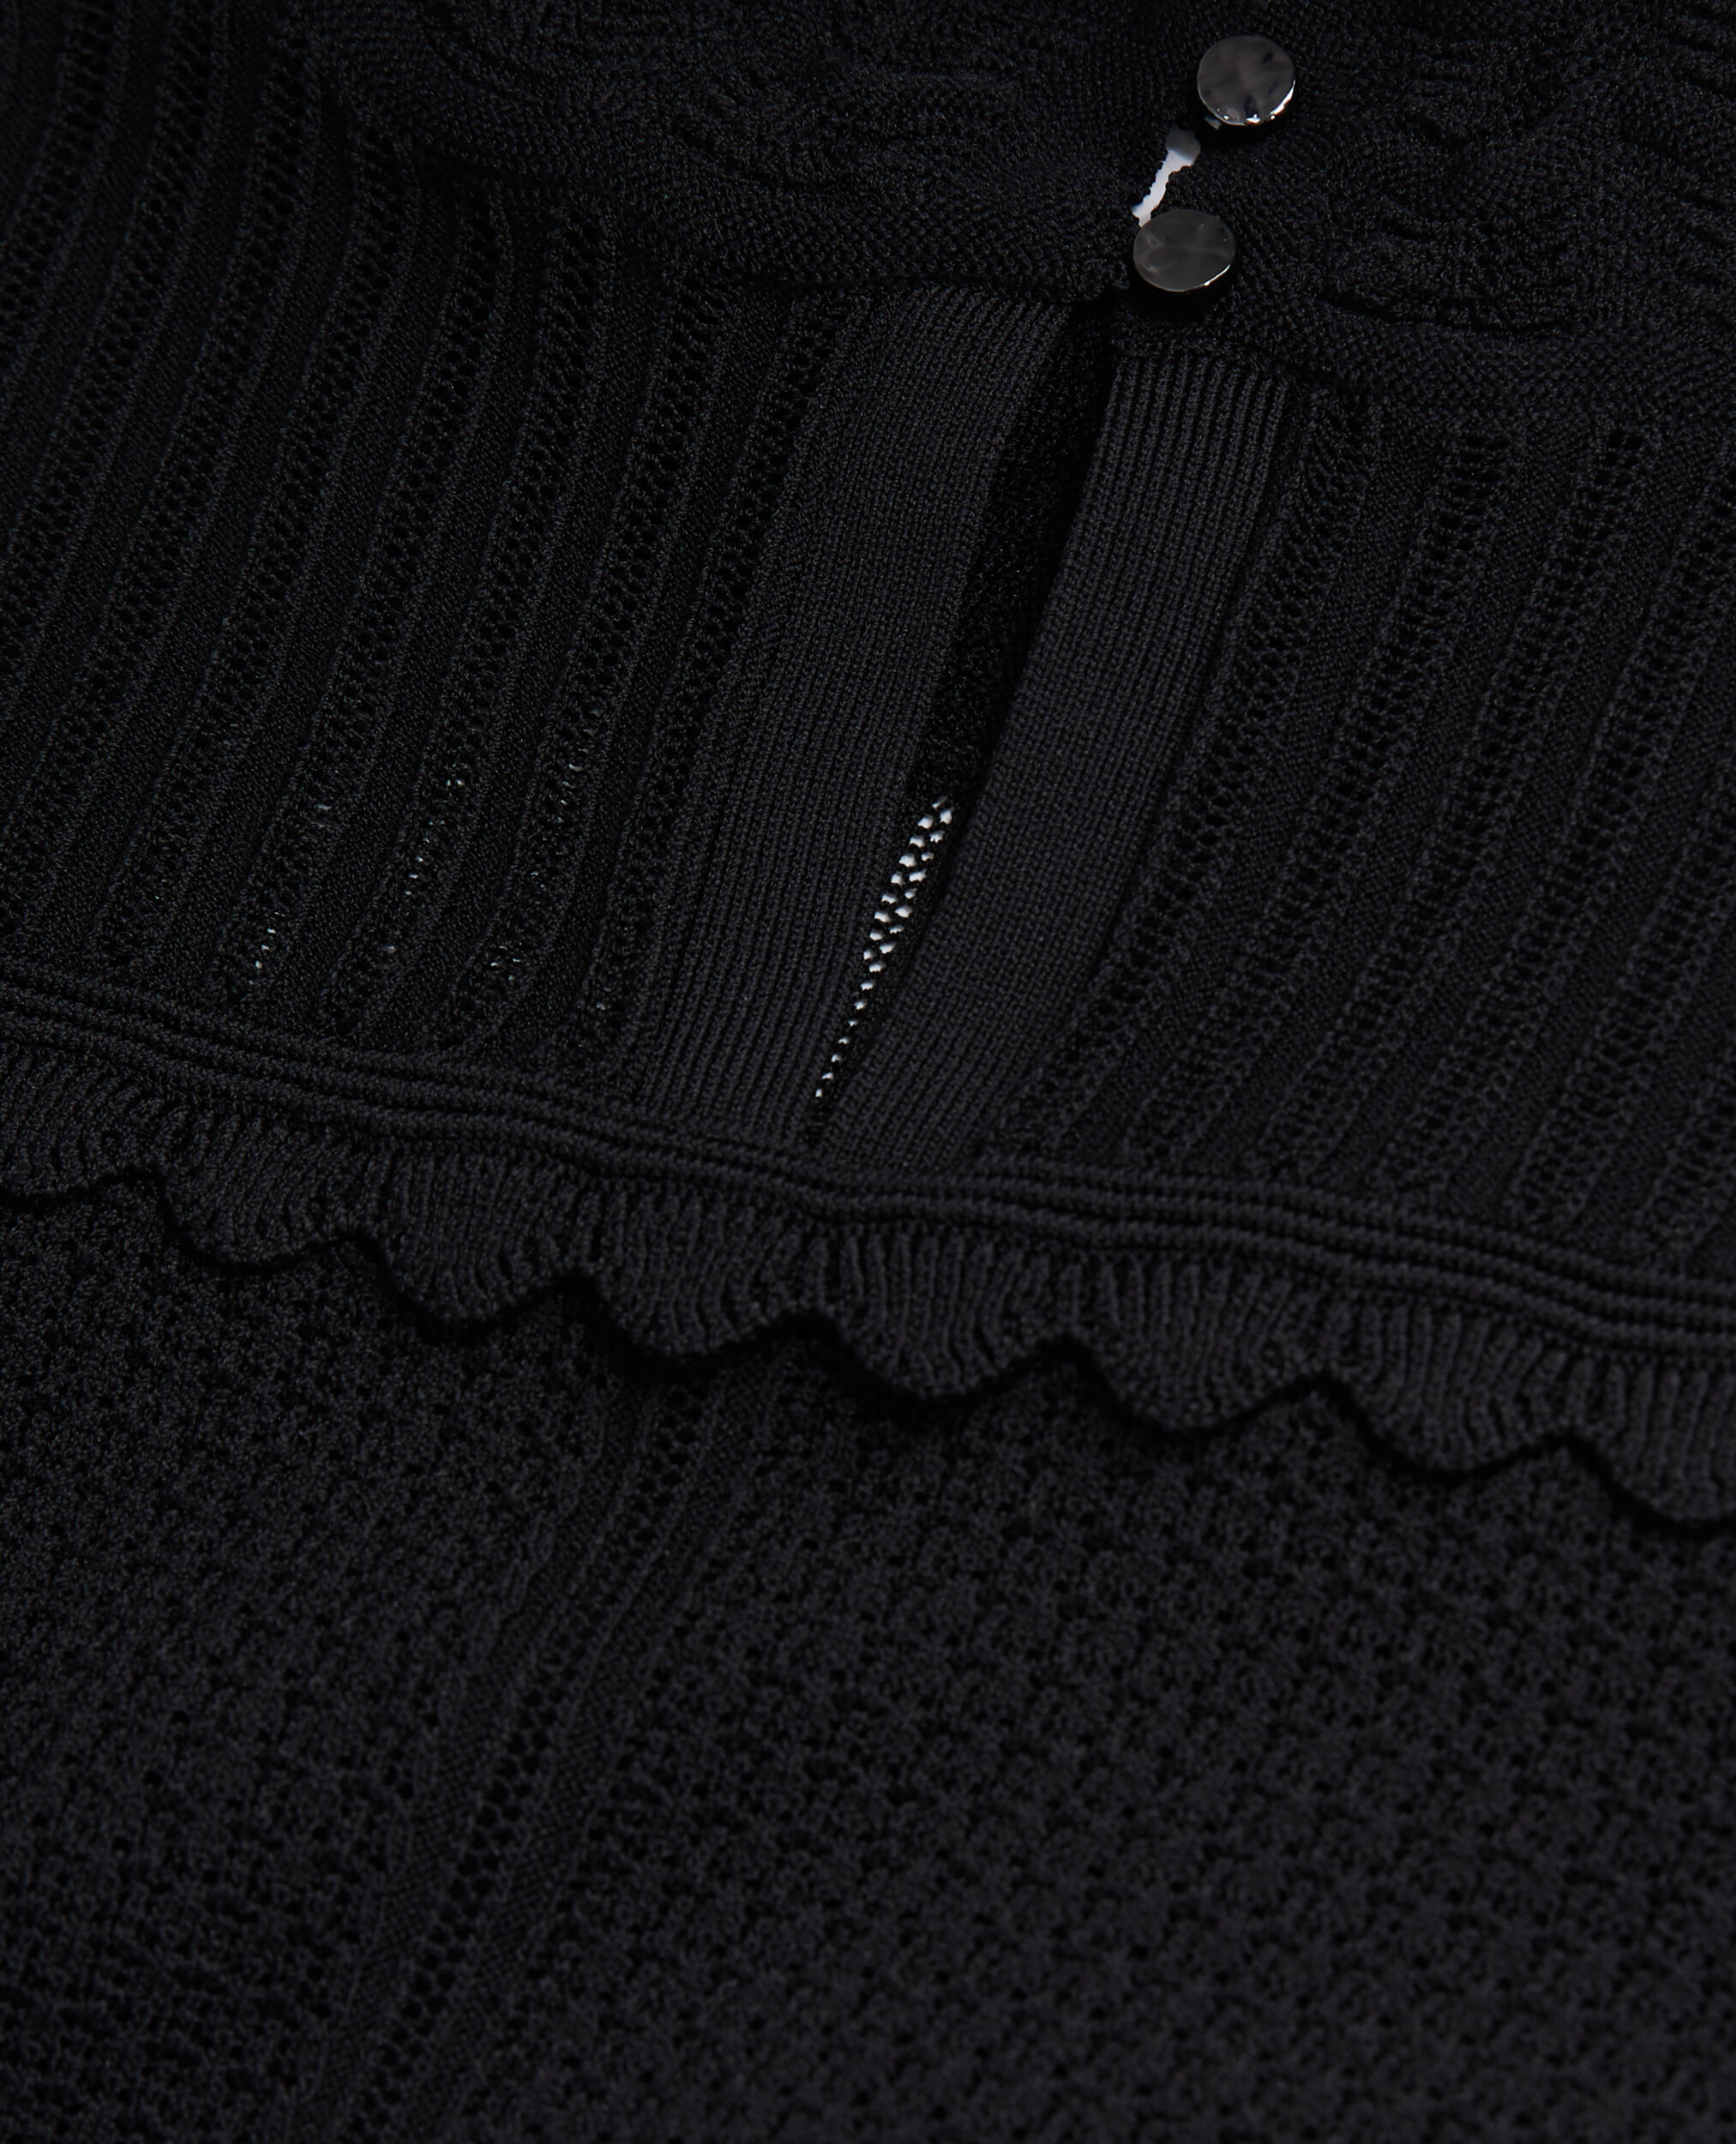 Cropped black openwork mesh sweater, BLACK, hi-res image number null